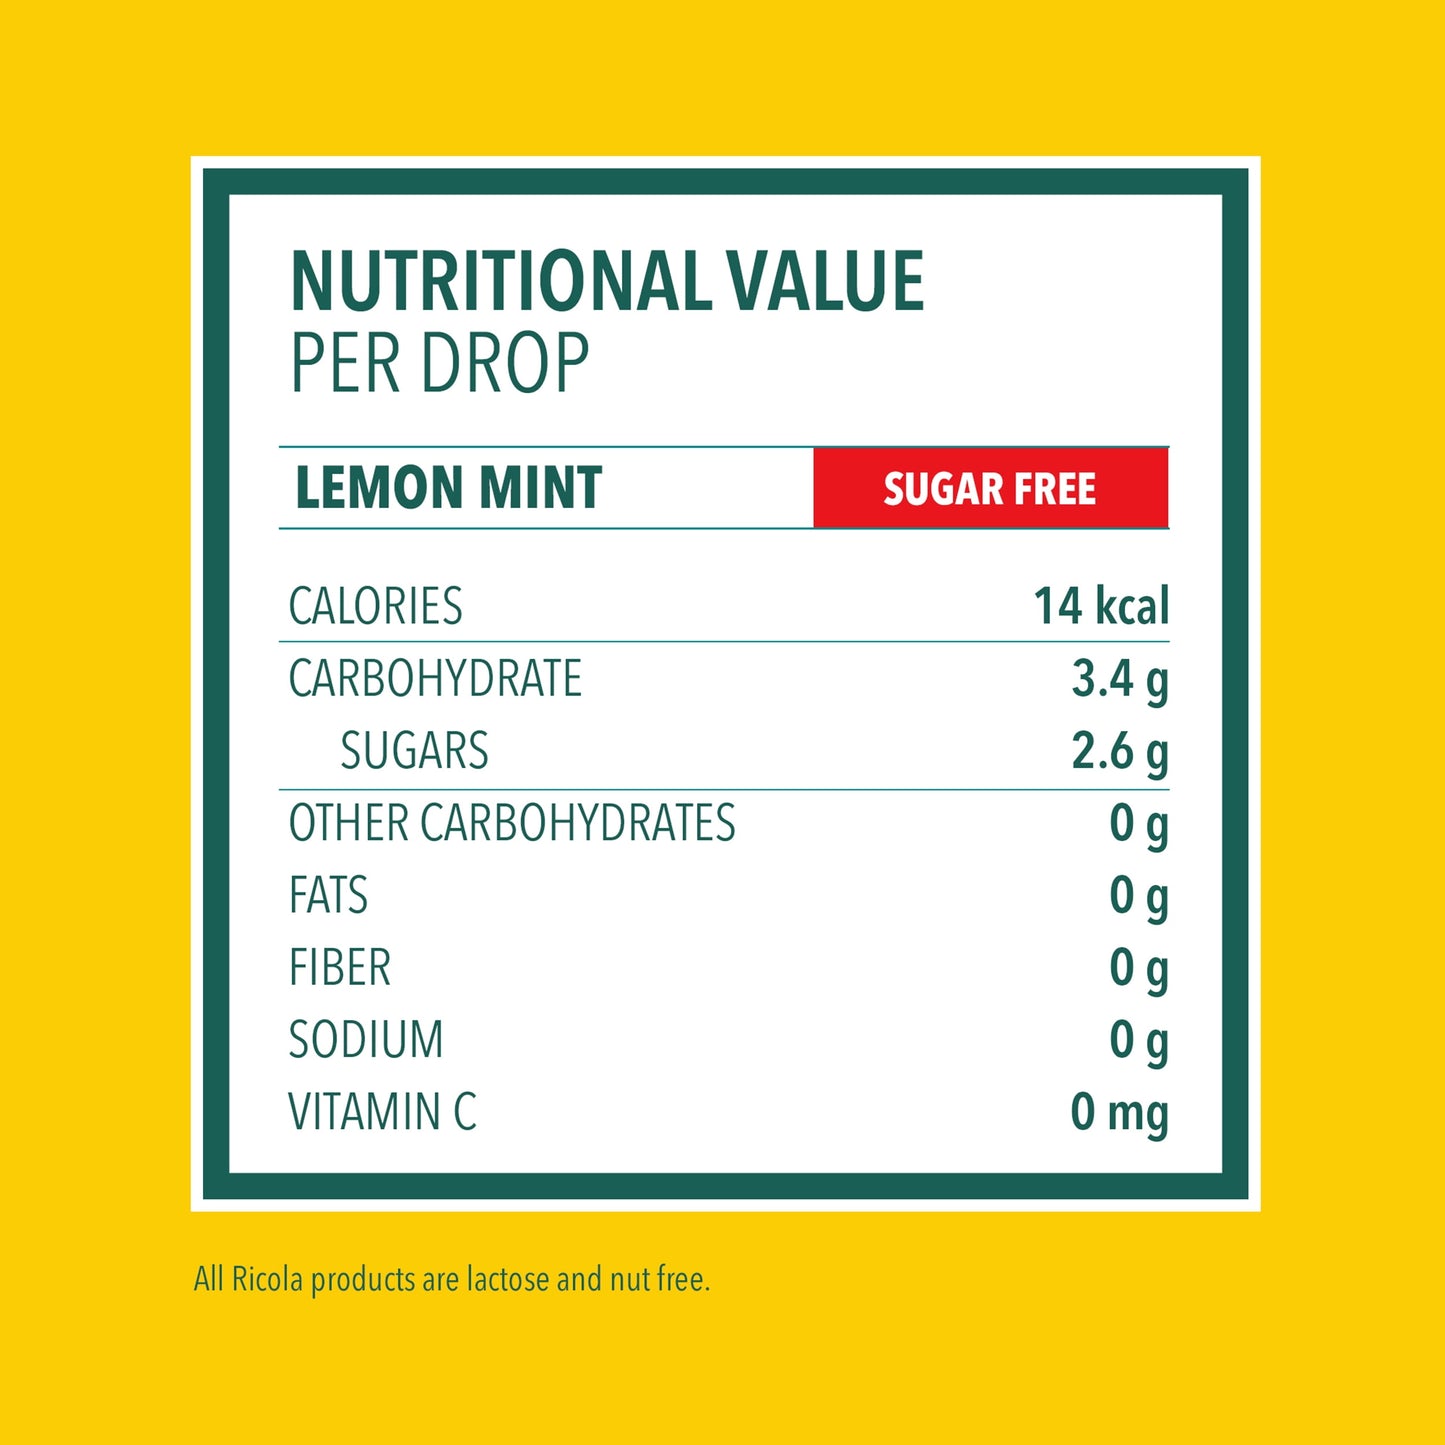 Ricola Sugar Free Lemon Mint Throat Drops - 45 Count